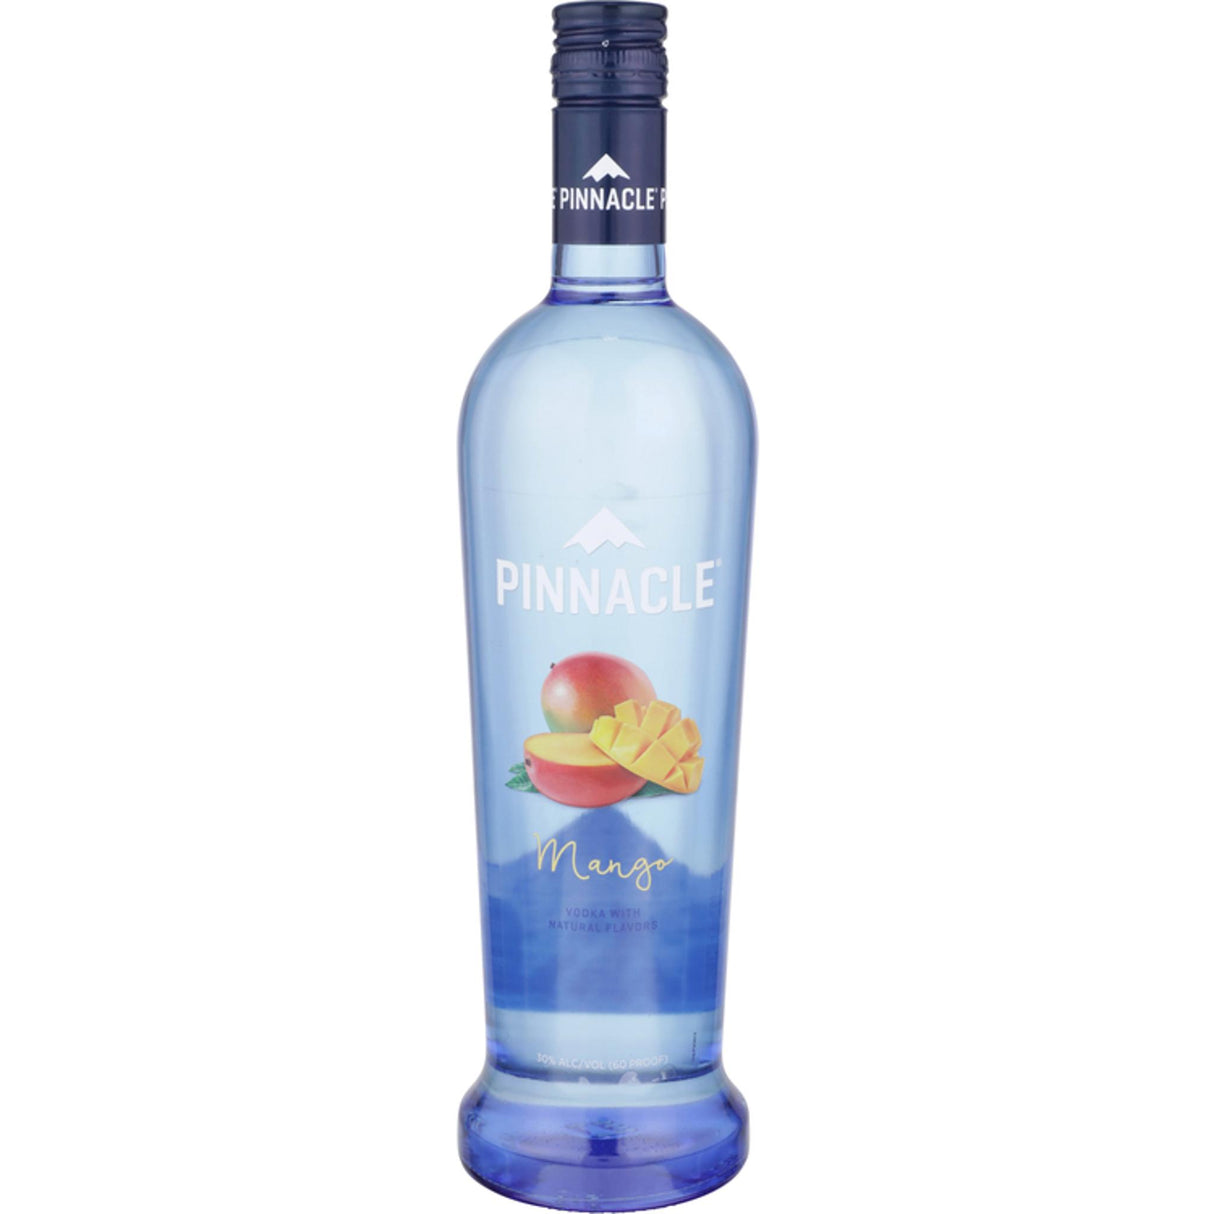 Pinnacle Mango Flavored Vodka - Liquor Geeks